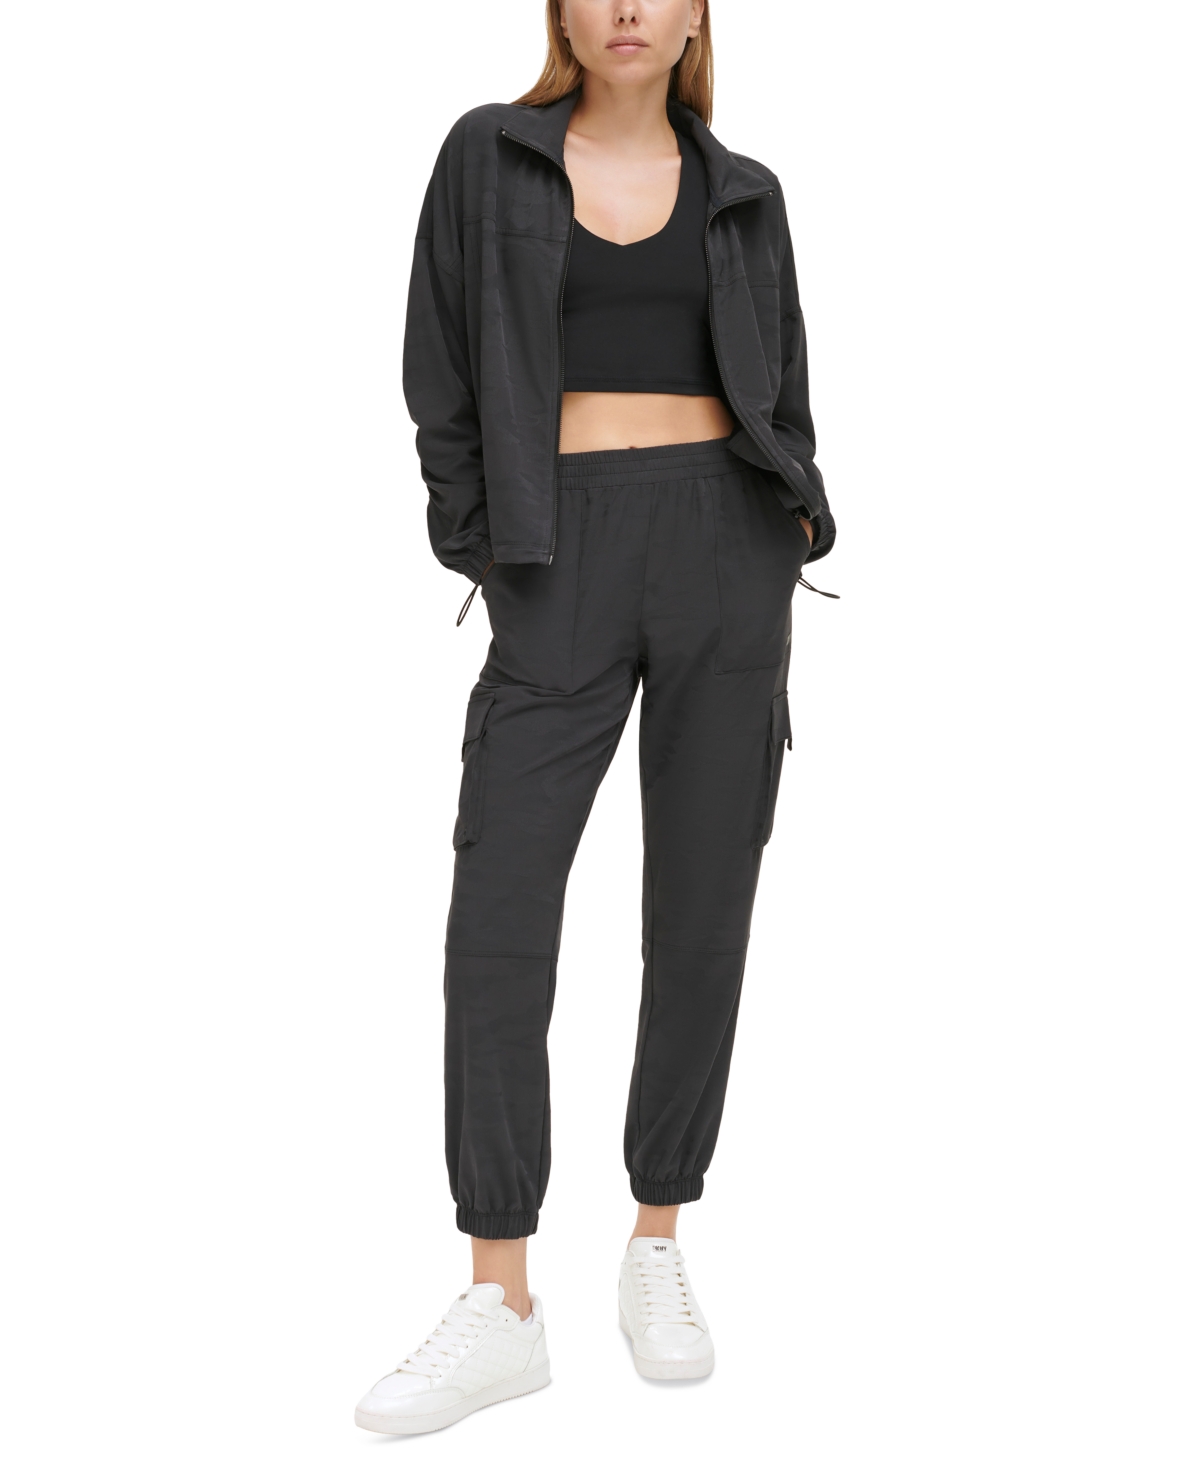 DKNY Women's Fleece Jogger Sweatpant with Pockets, Black Fleece